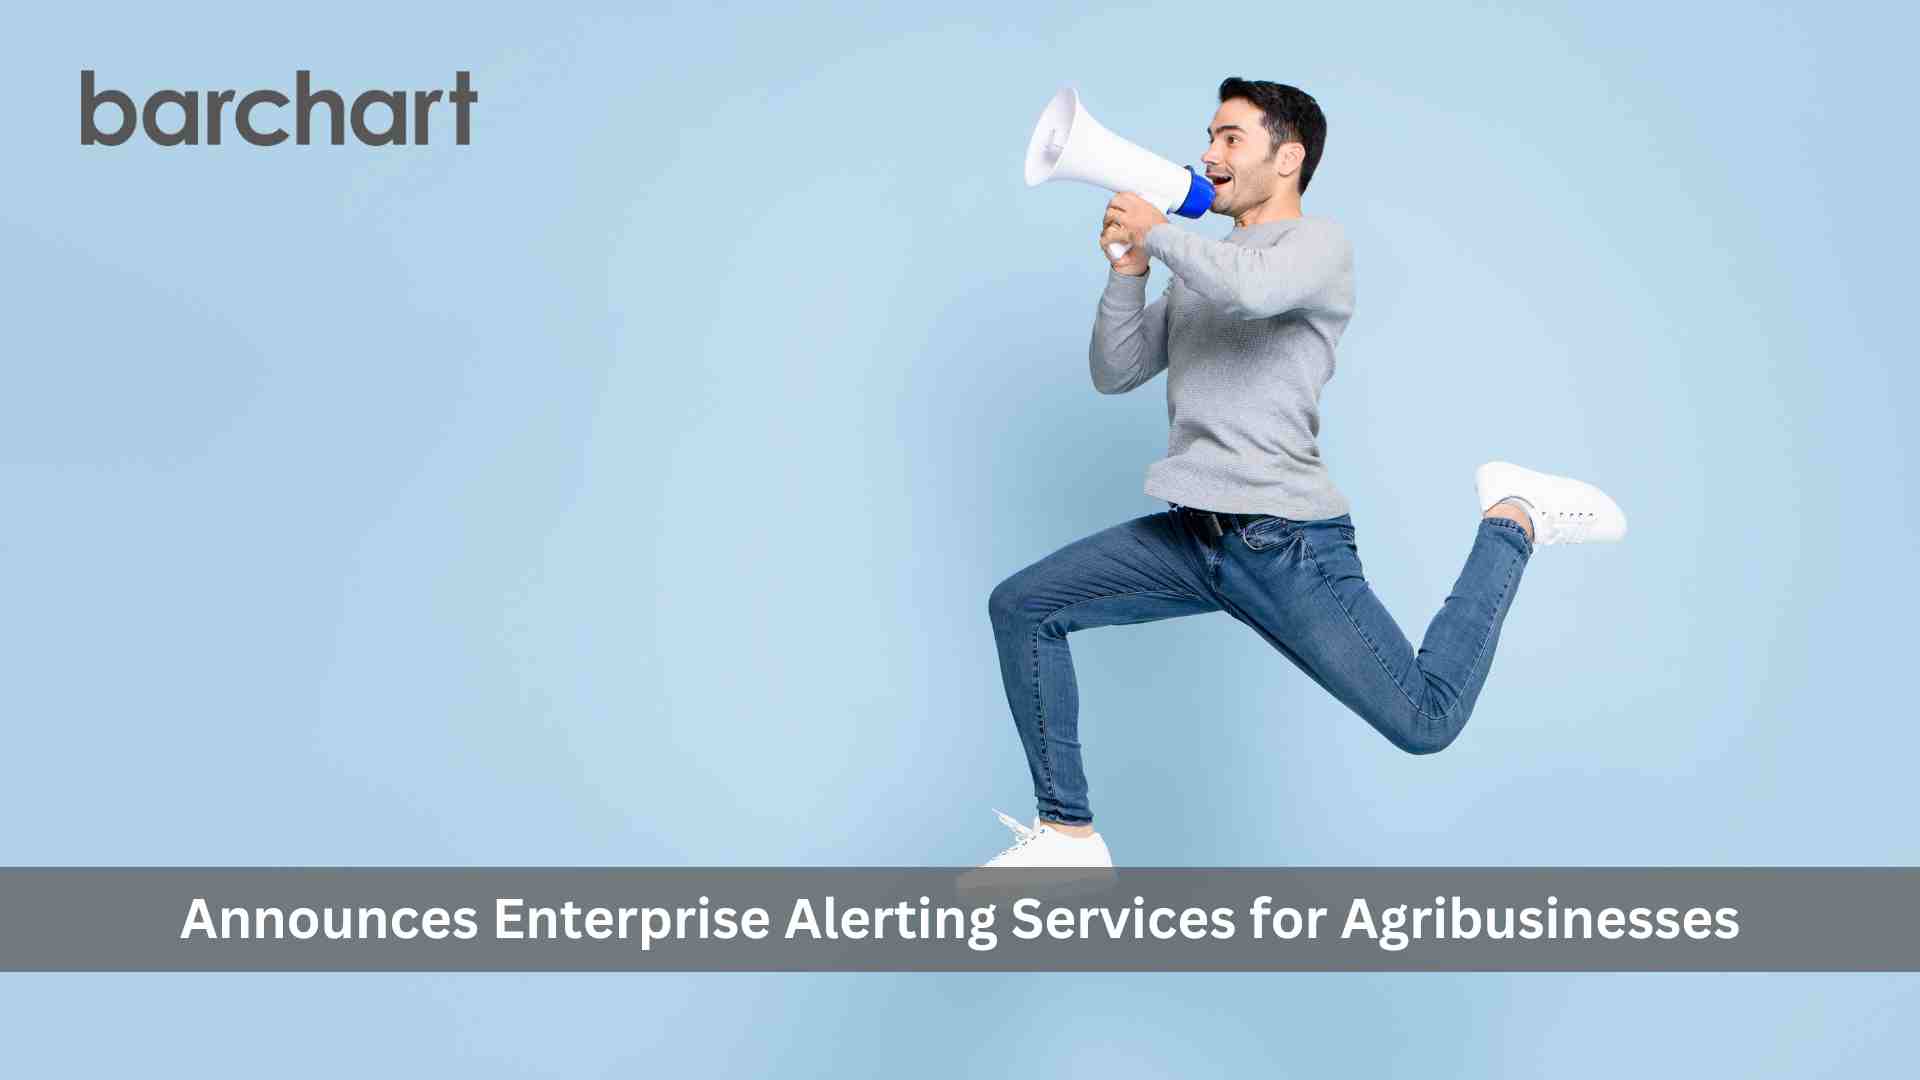 Barchart Announces Enterprise Alerting Services for Agribusinesses